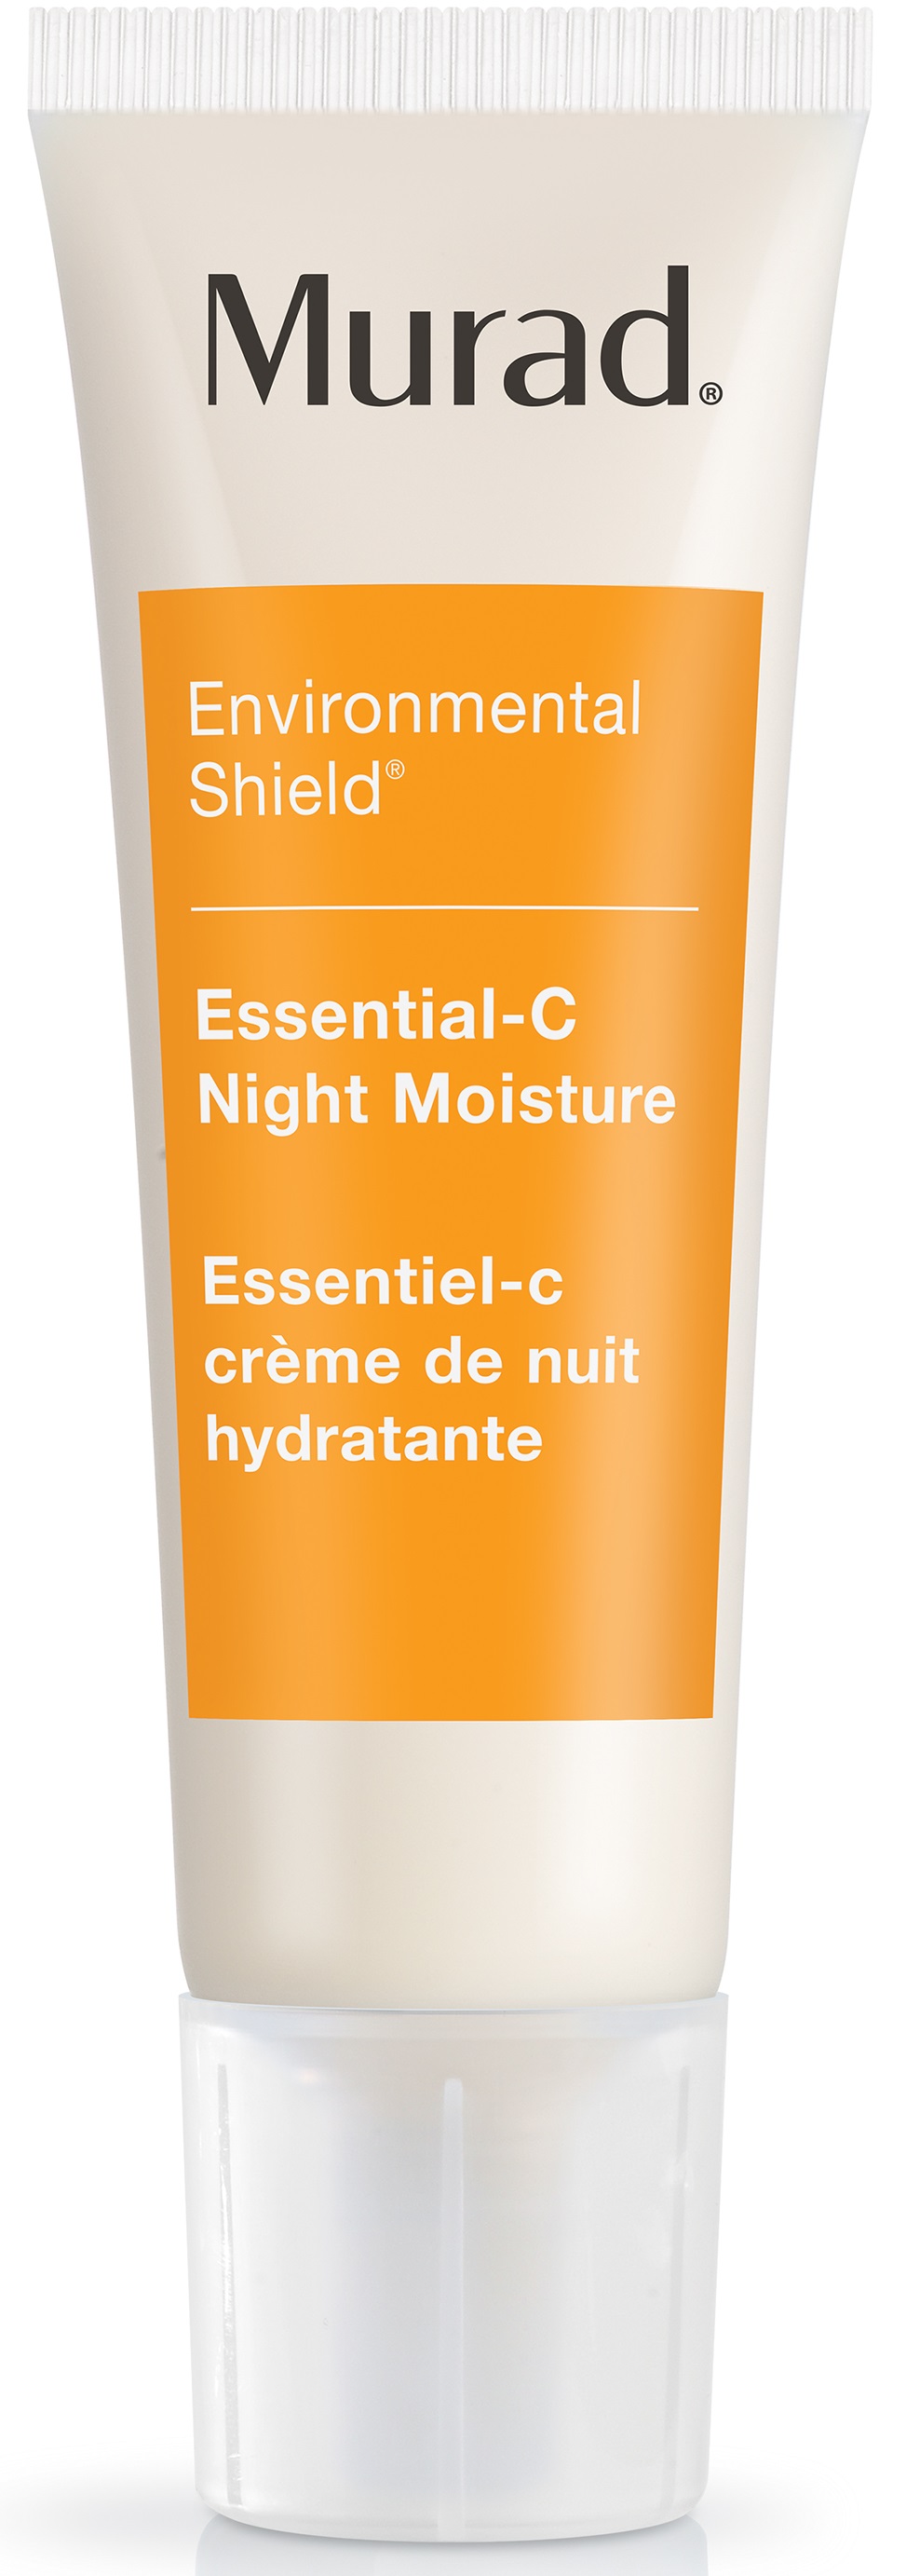 Murad Environmental Shield Essential-C Night Moisture